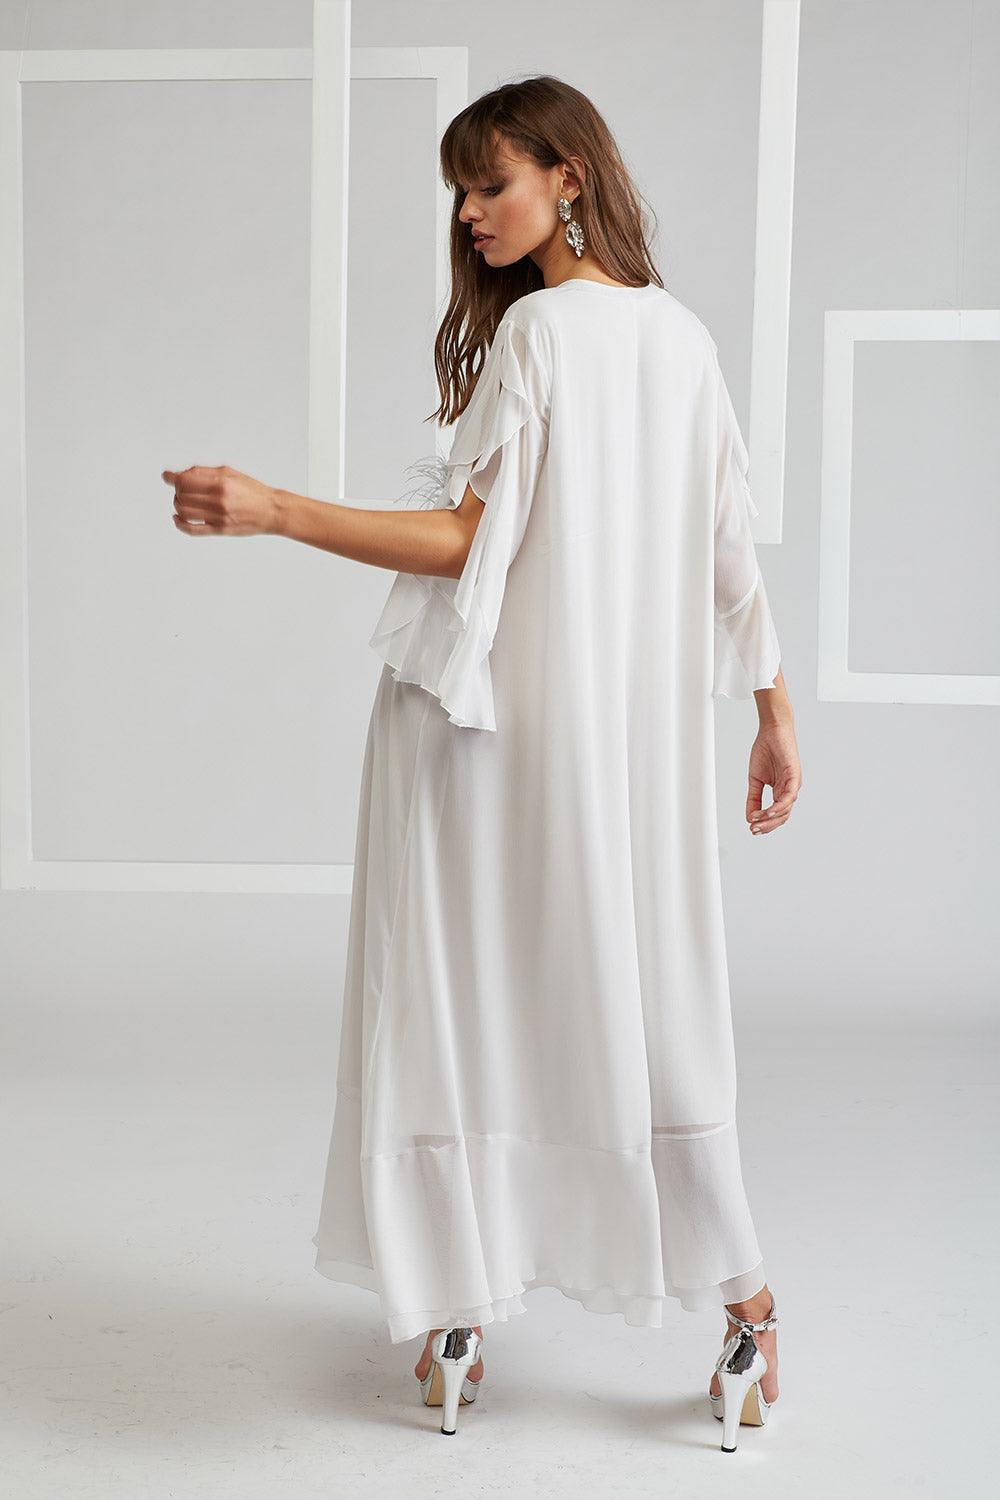 Silk Chiffon Dress Triangular Sleeve White Emy - Bocan Couture